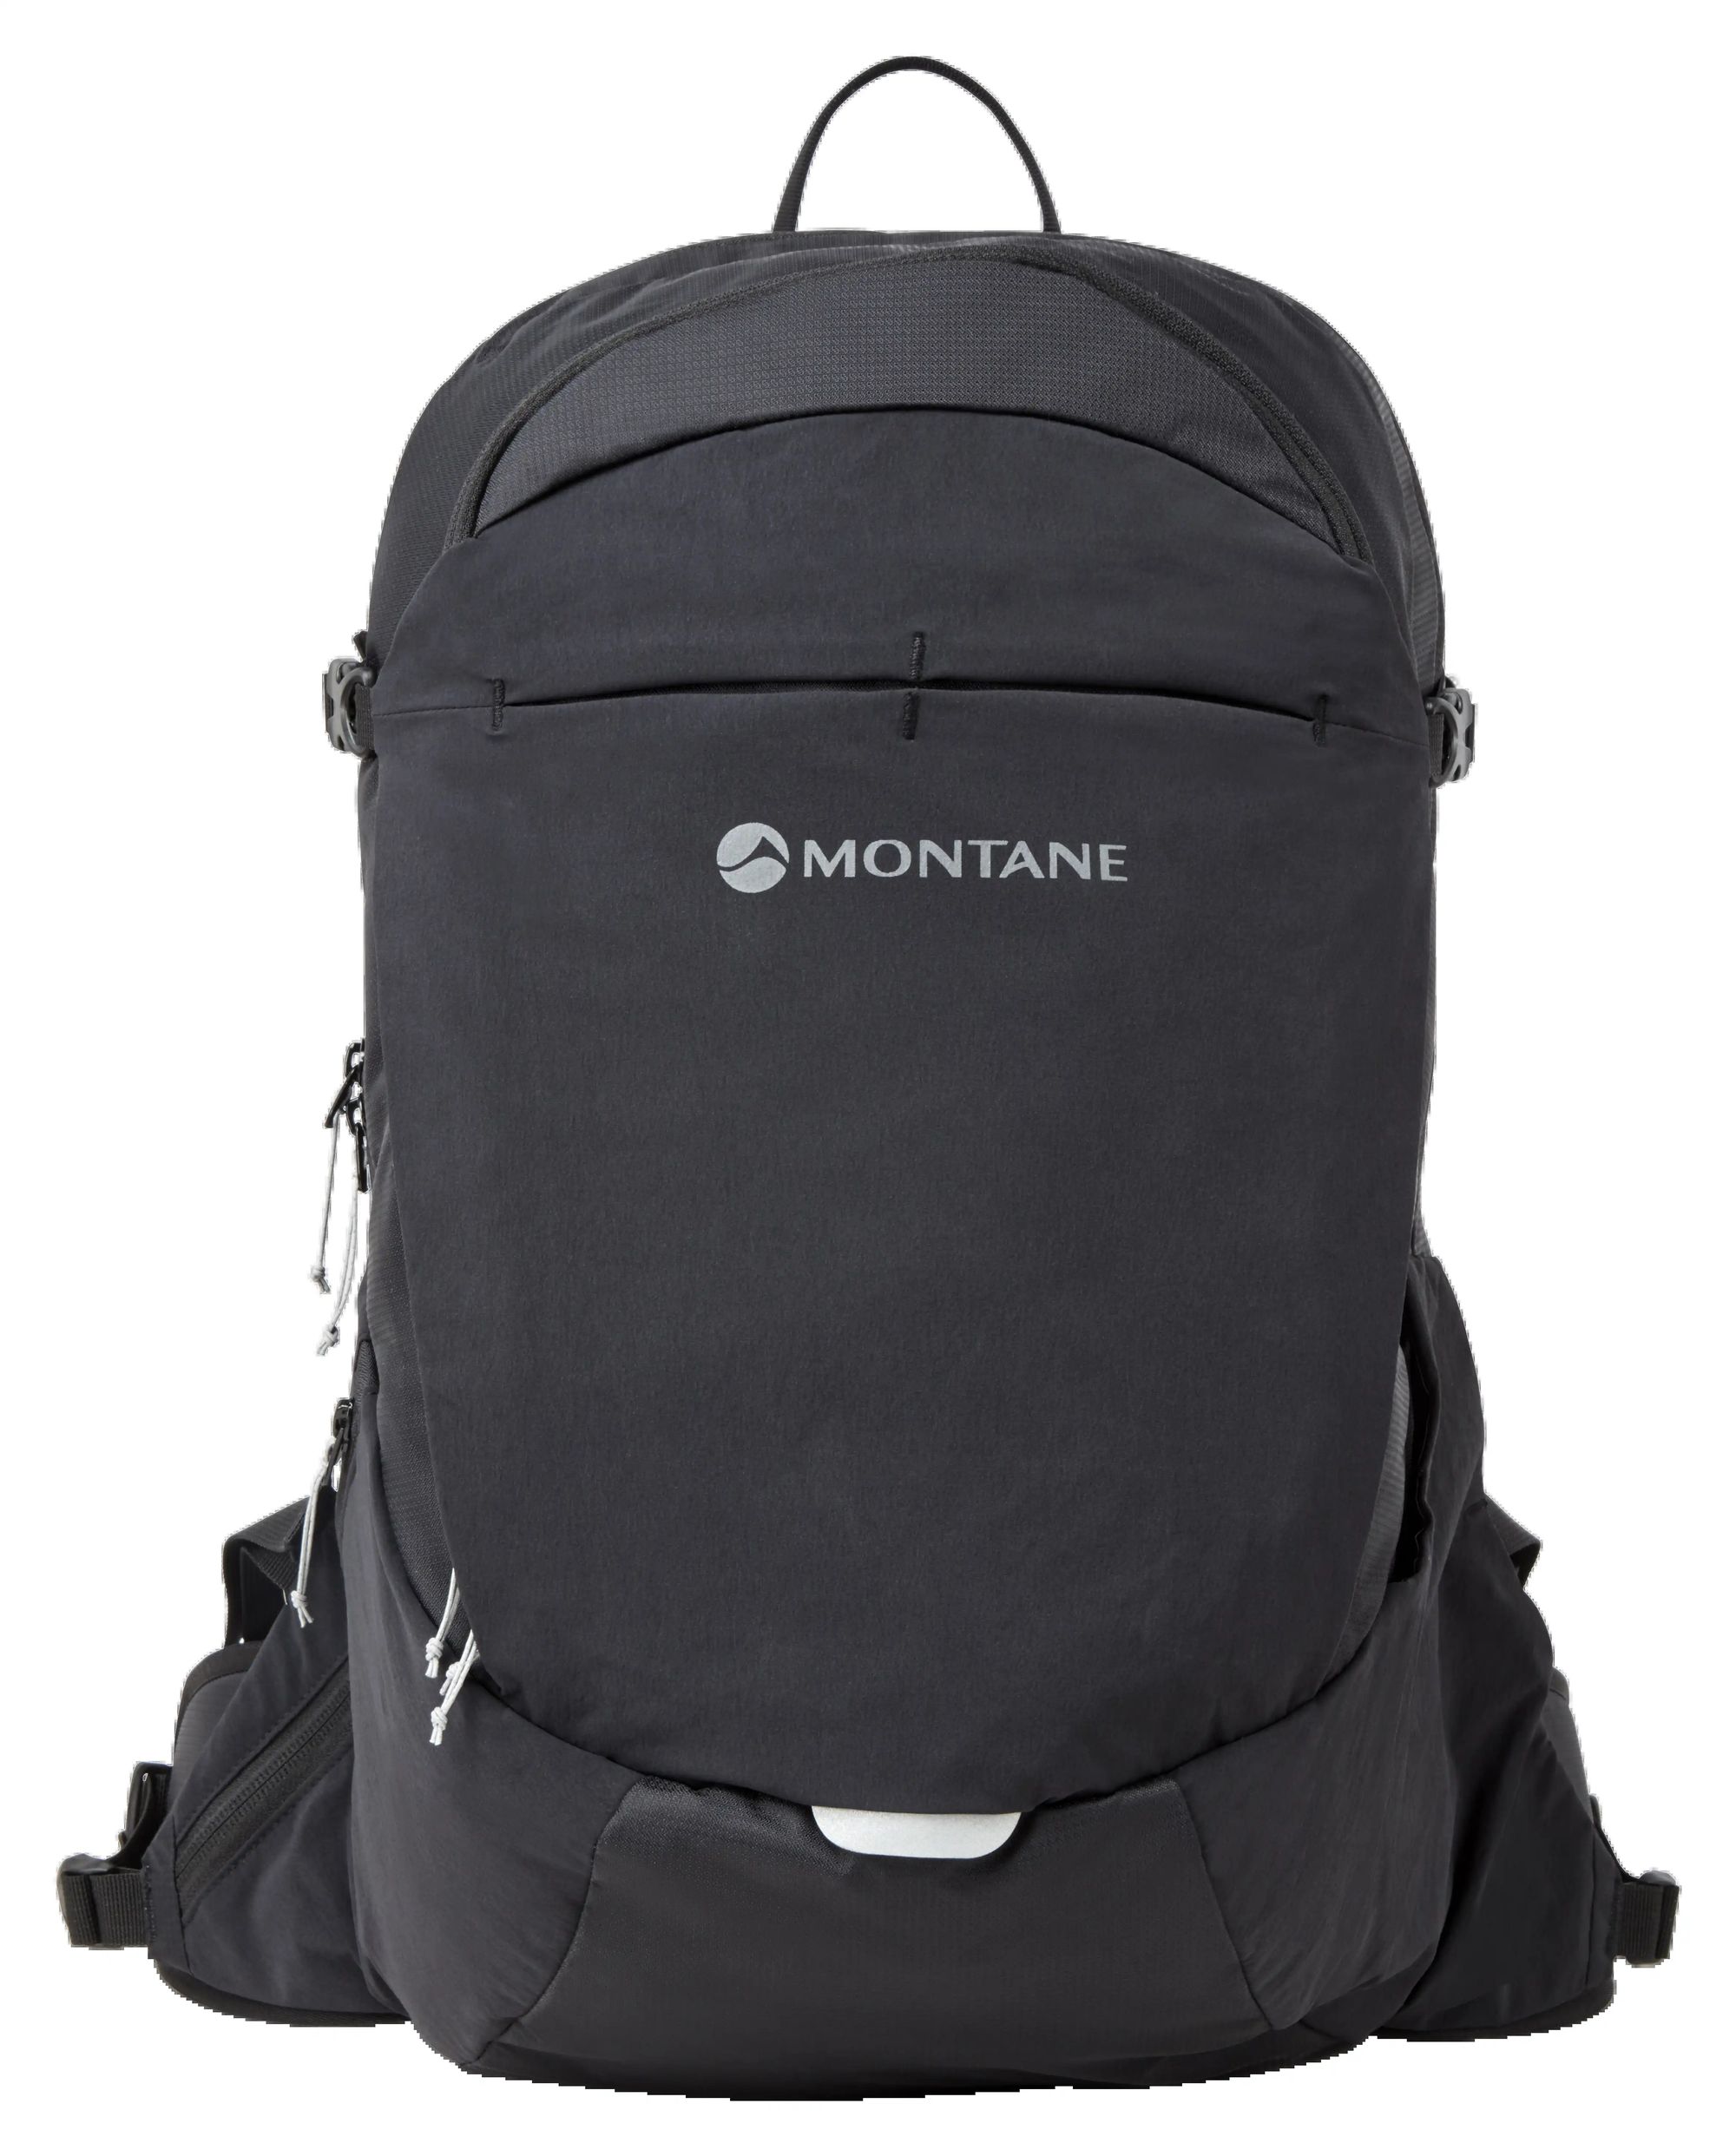 Montane ORBITON 25-28-BLACK-ONE SIZE batoh černý